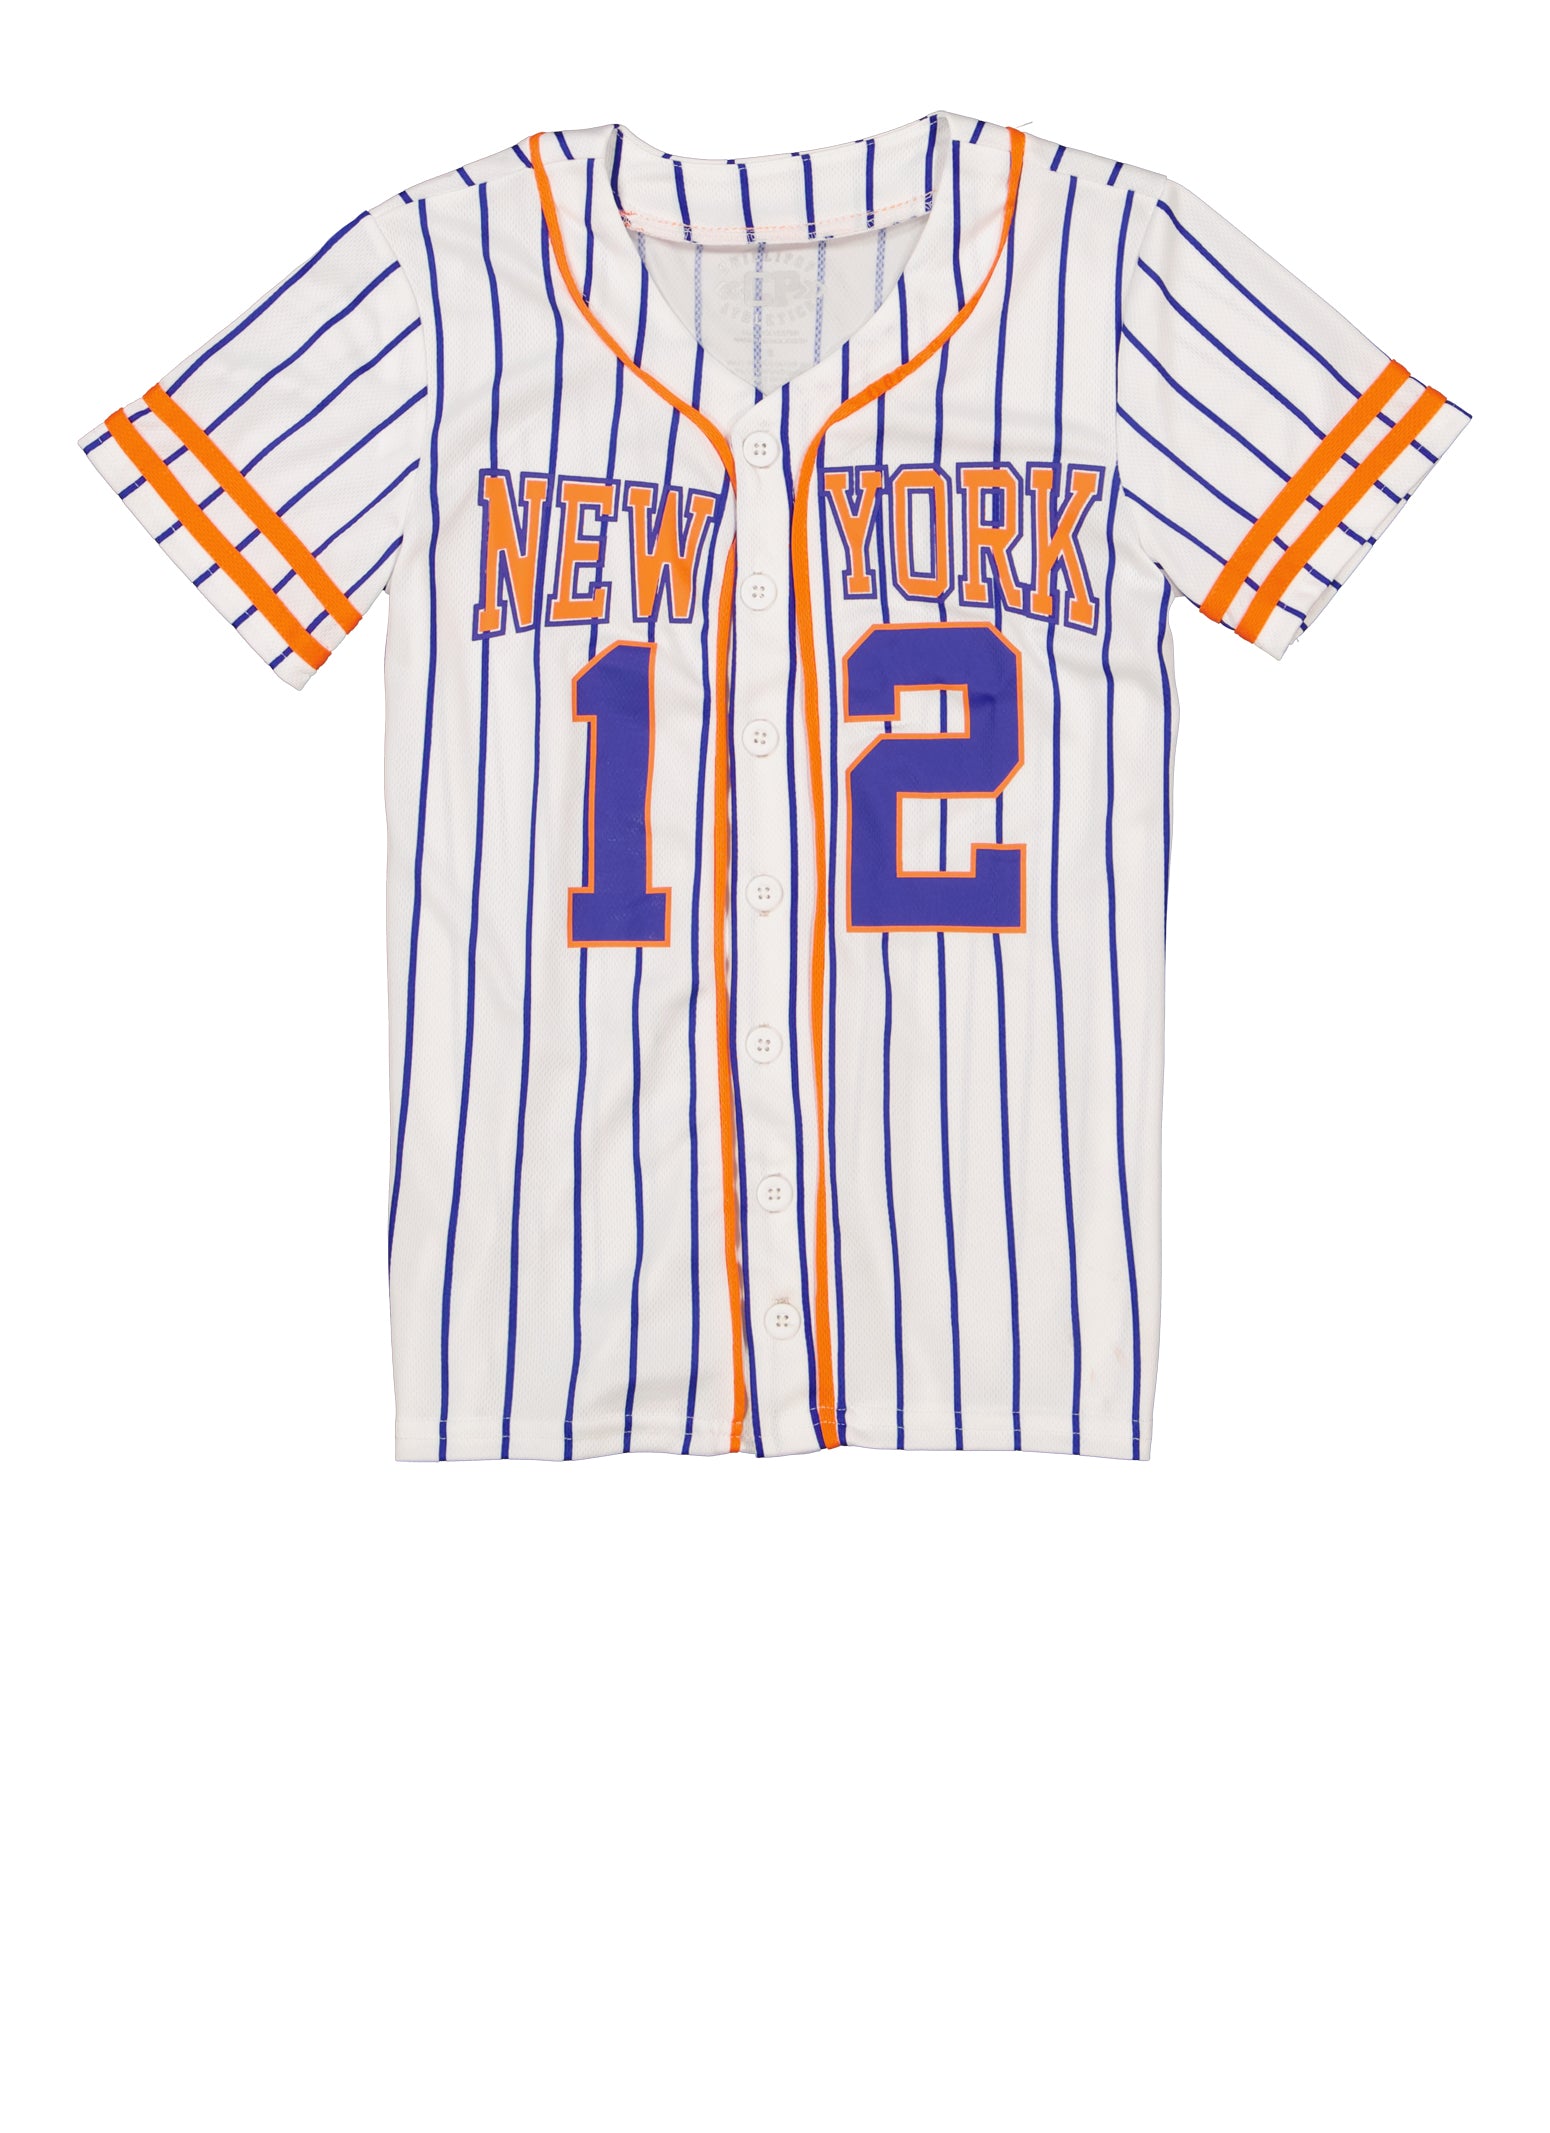 Boys Varsity Striped New York Graphic Baseball Jersey, White,